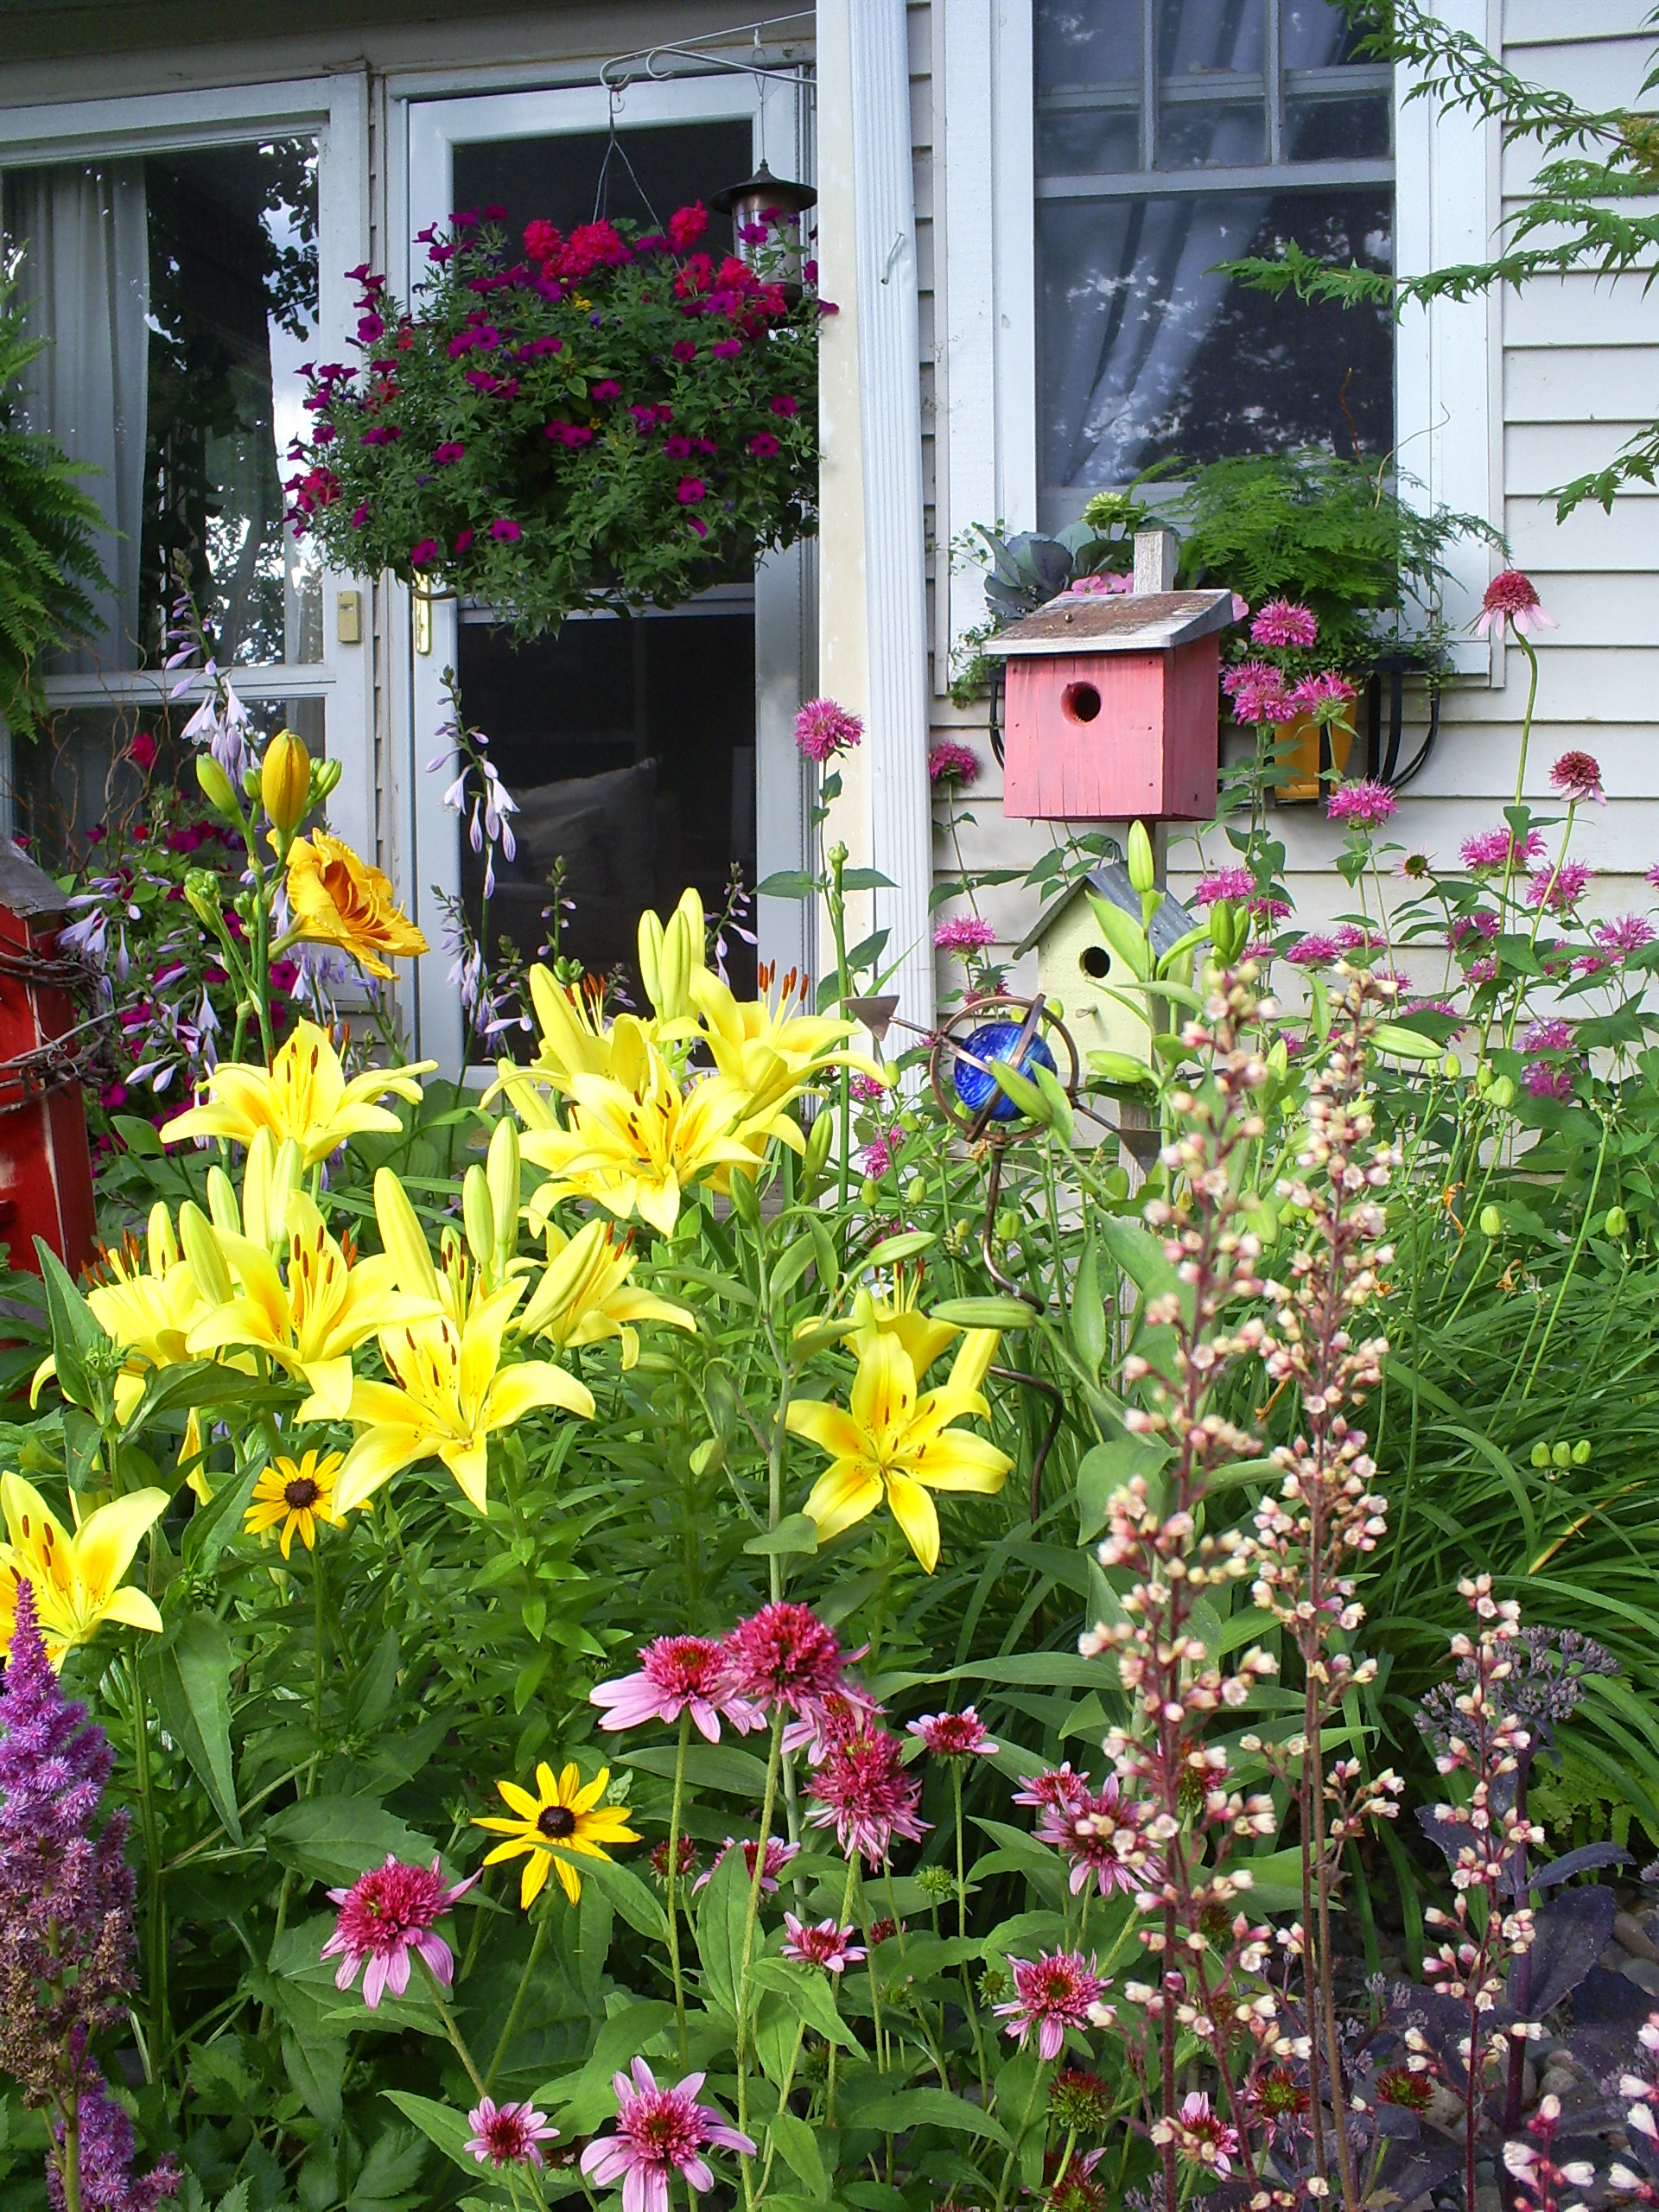 Details about   Mini Fairy Garden Miniature House Craft Micro Landscape Decor NEW HOT Best 